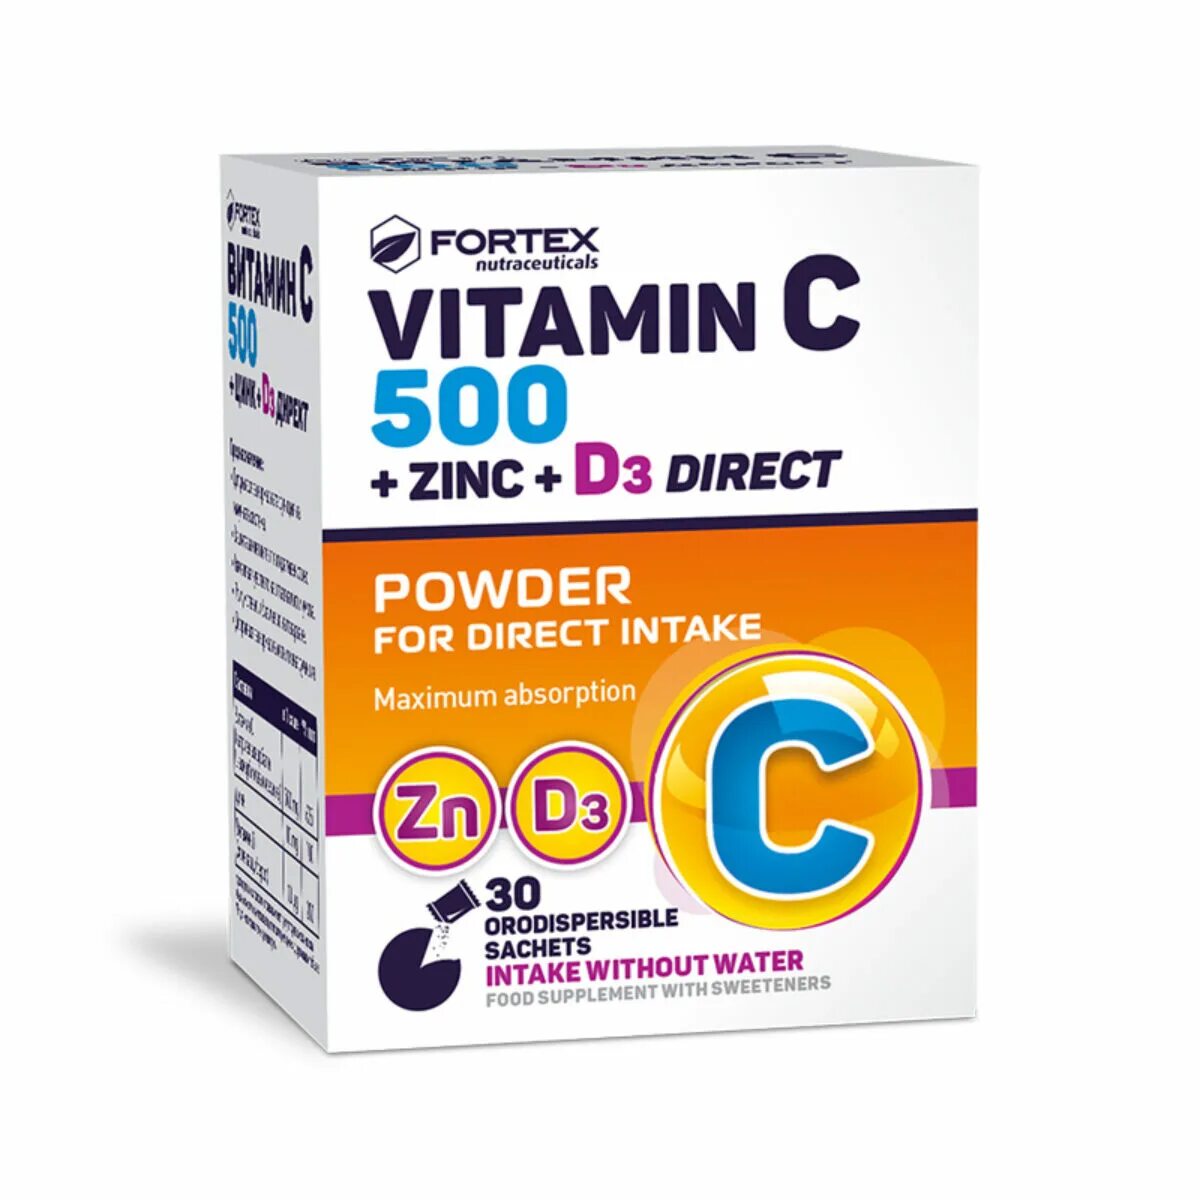 Вит zn. Витамин д3 цинк и витамин с. Витамин с с цинком селеном и д3. Витамин д3 и цинк Эвалар и витамин с. Витамин д3 с цинком.